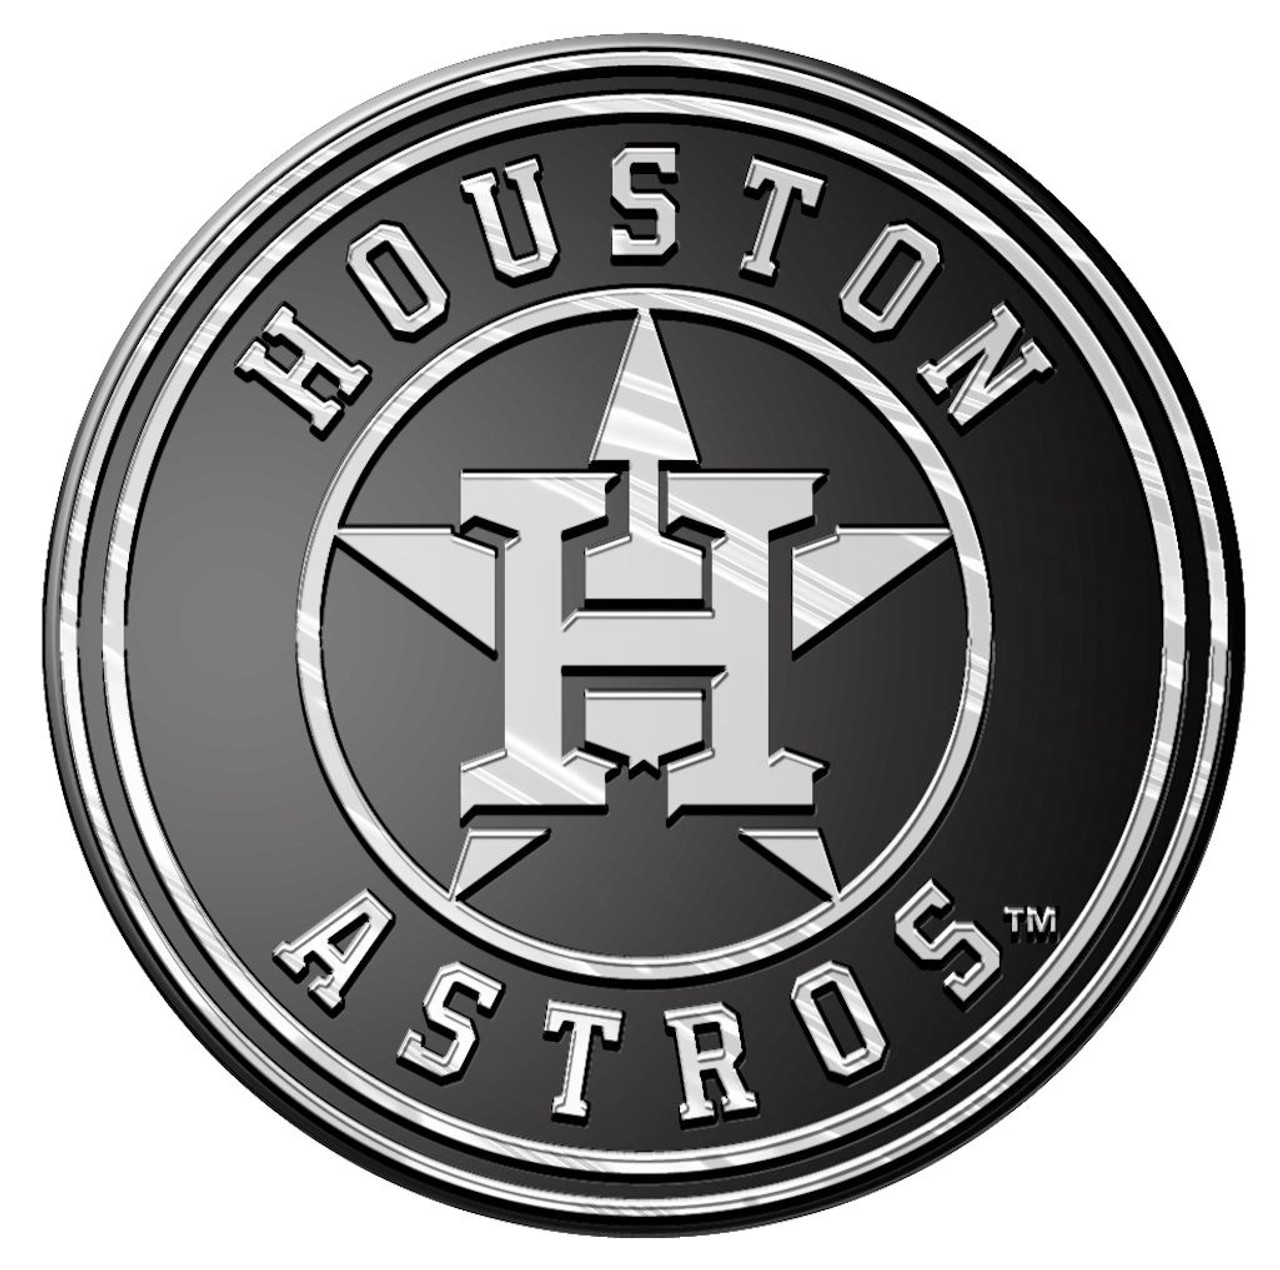 Houston Astros Vector 